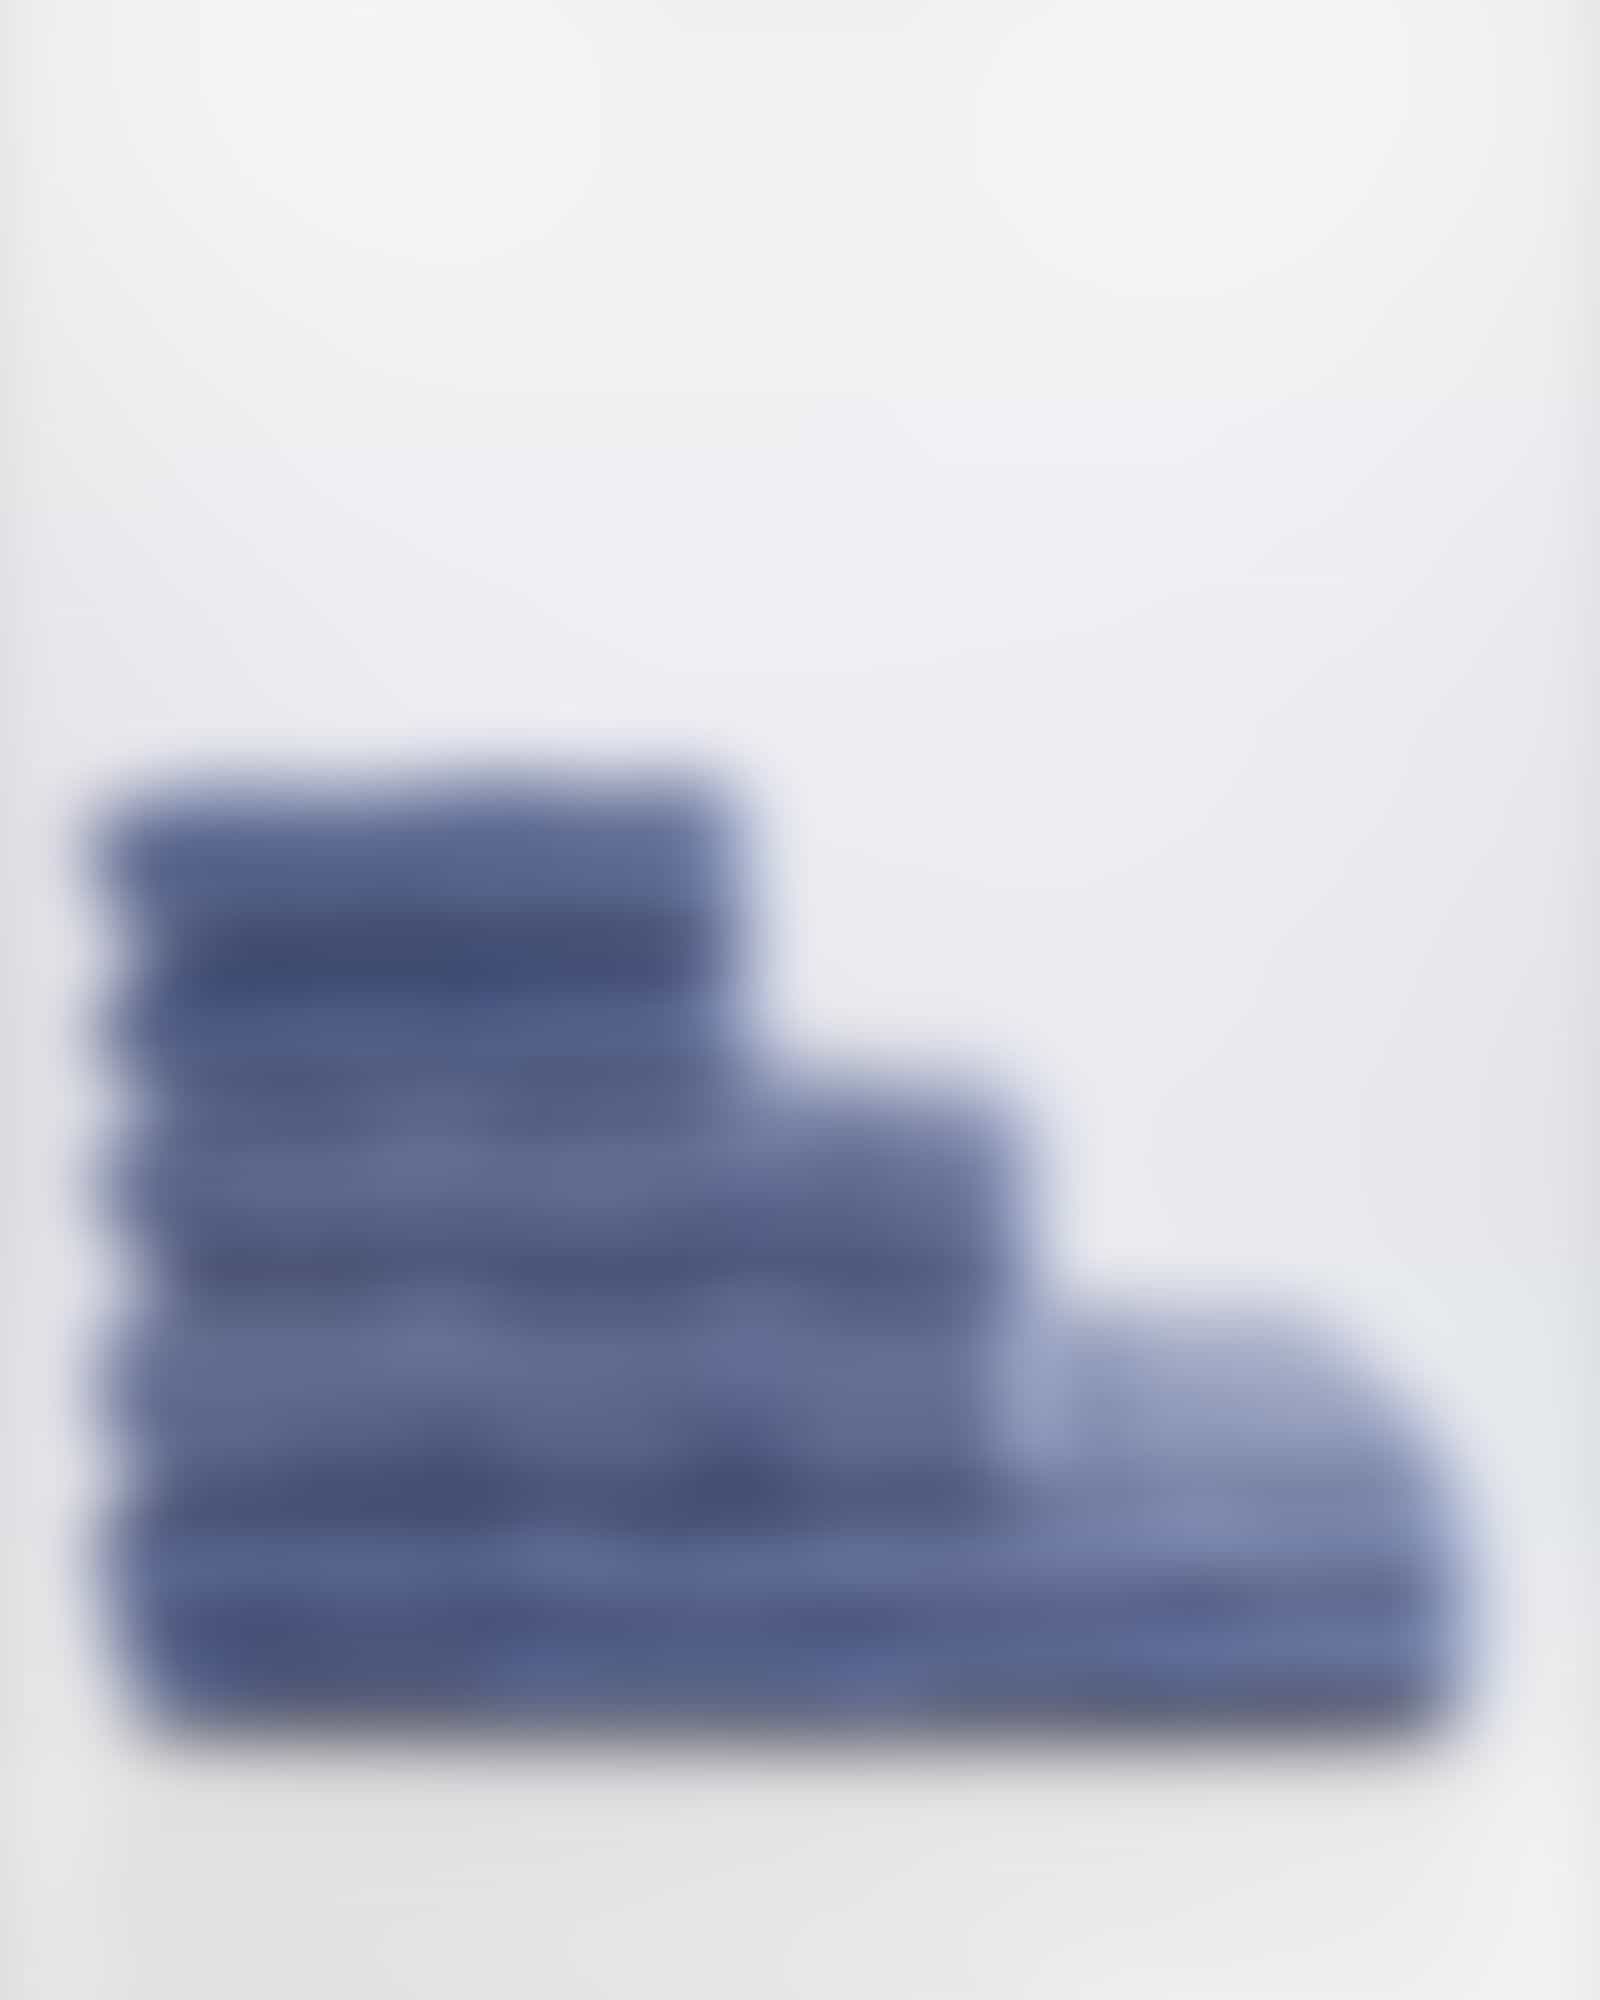 Cawö Handtücher Noblesse Harmony Streifen 1085 - Farbe: sky - 17 - Handtuch 50x100 cm